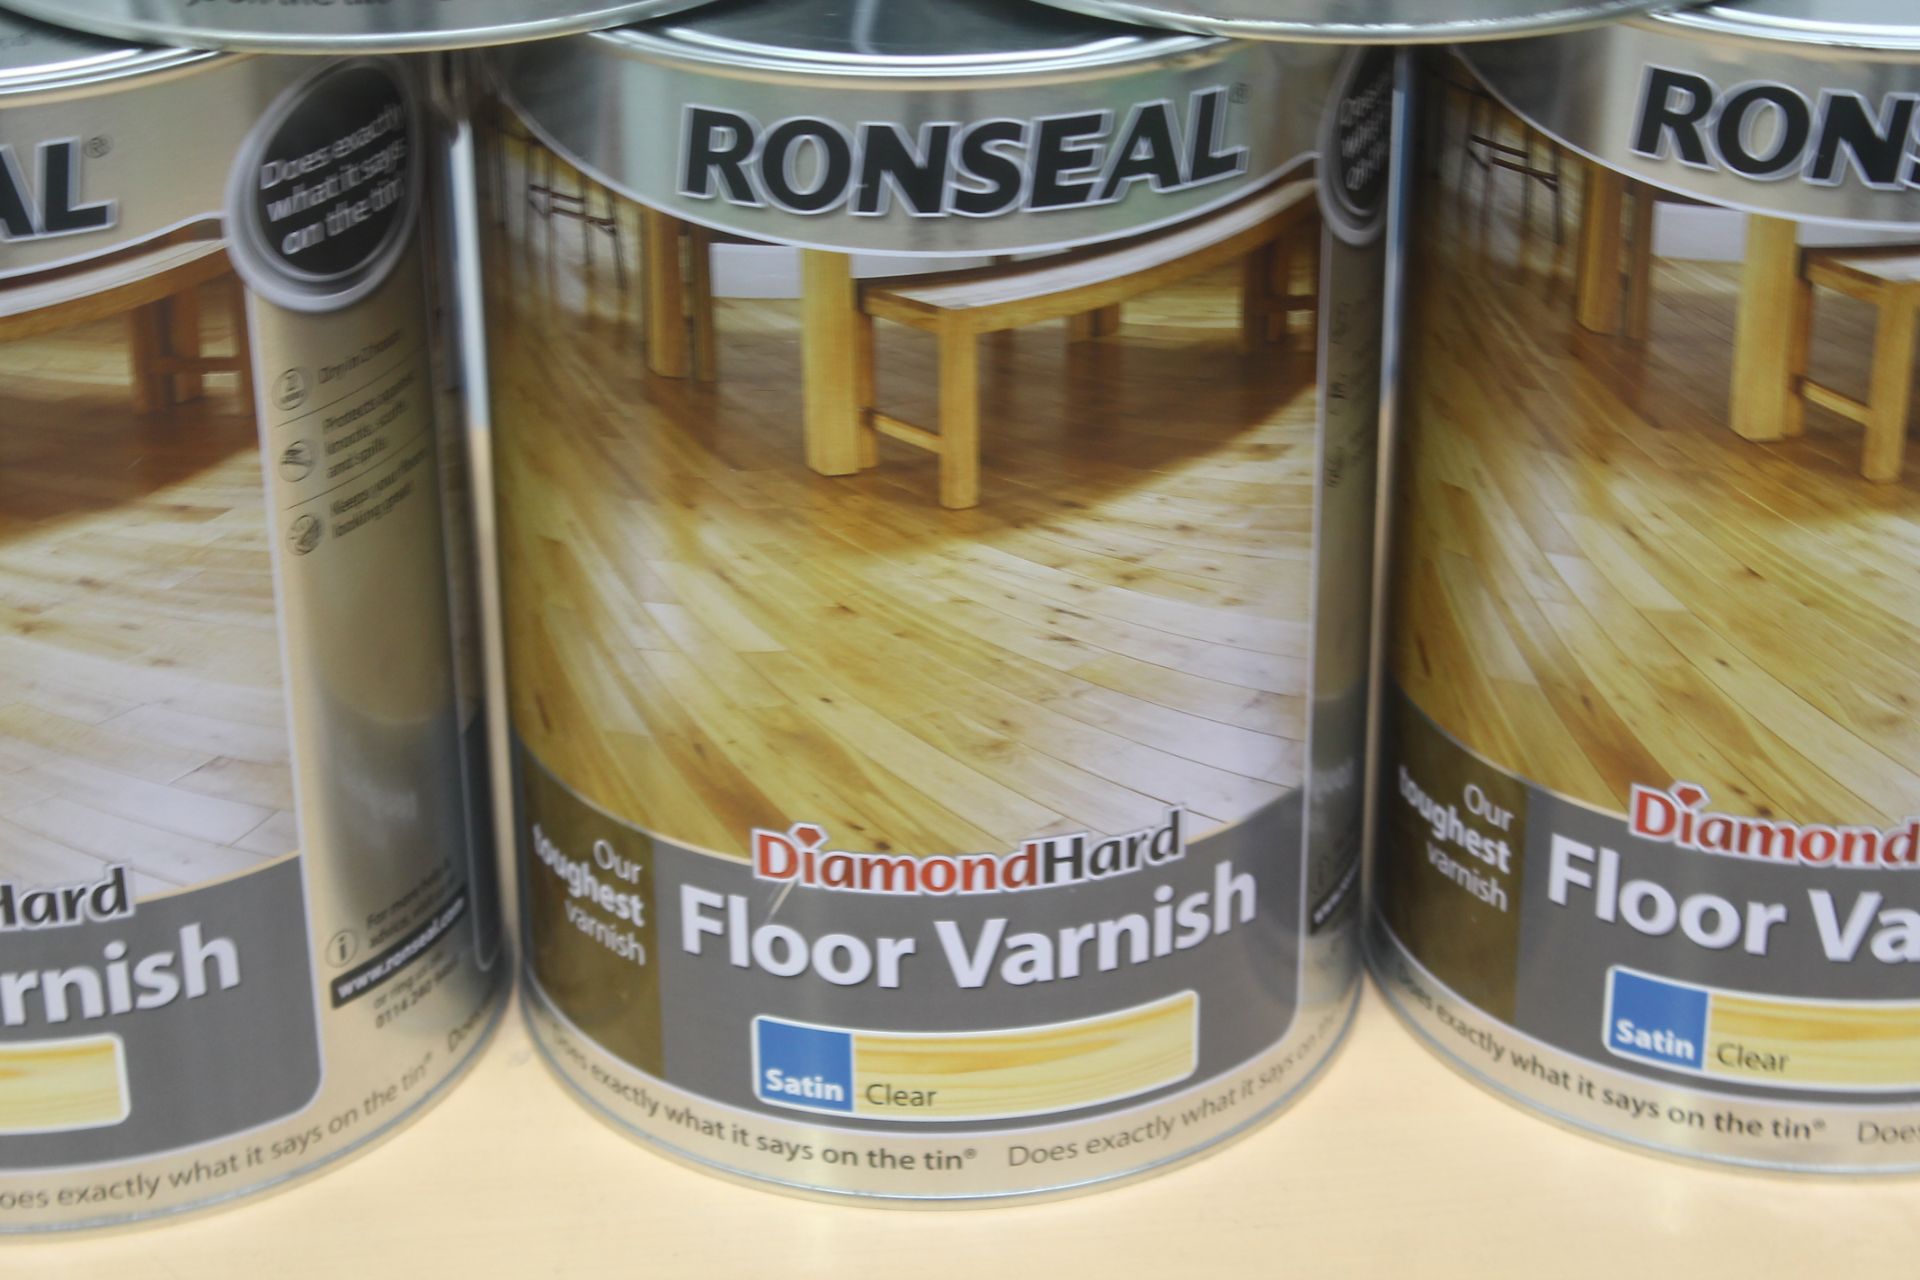 5 x 5L Ronseal Diamond Hard Floor Varnish (Satin Clear) - Image 2 of 2